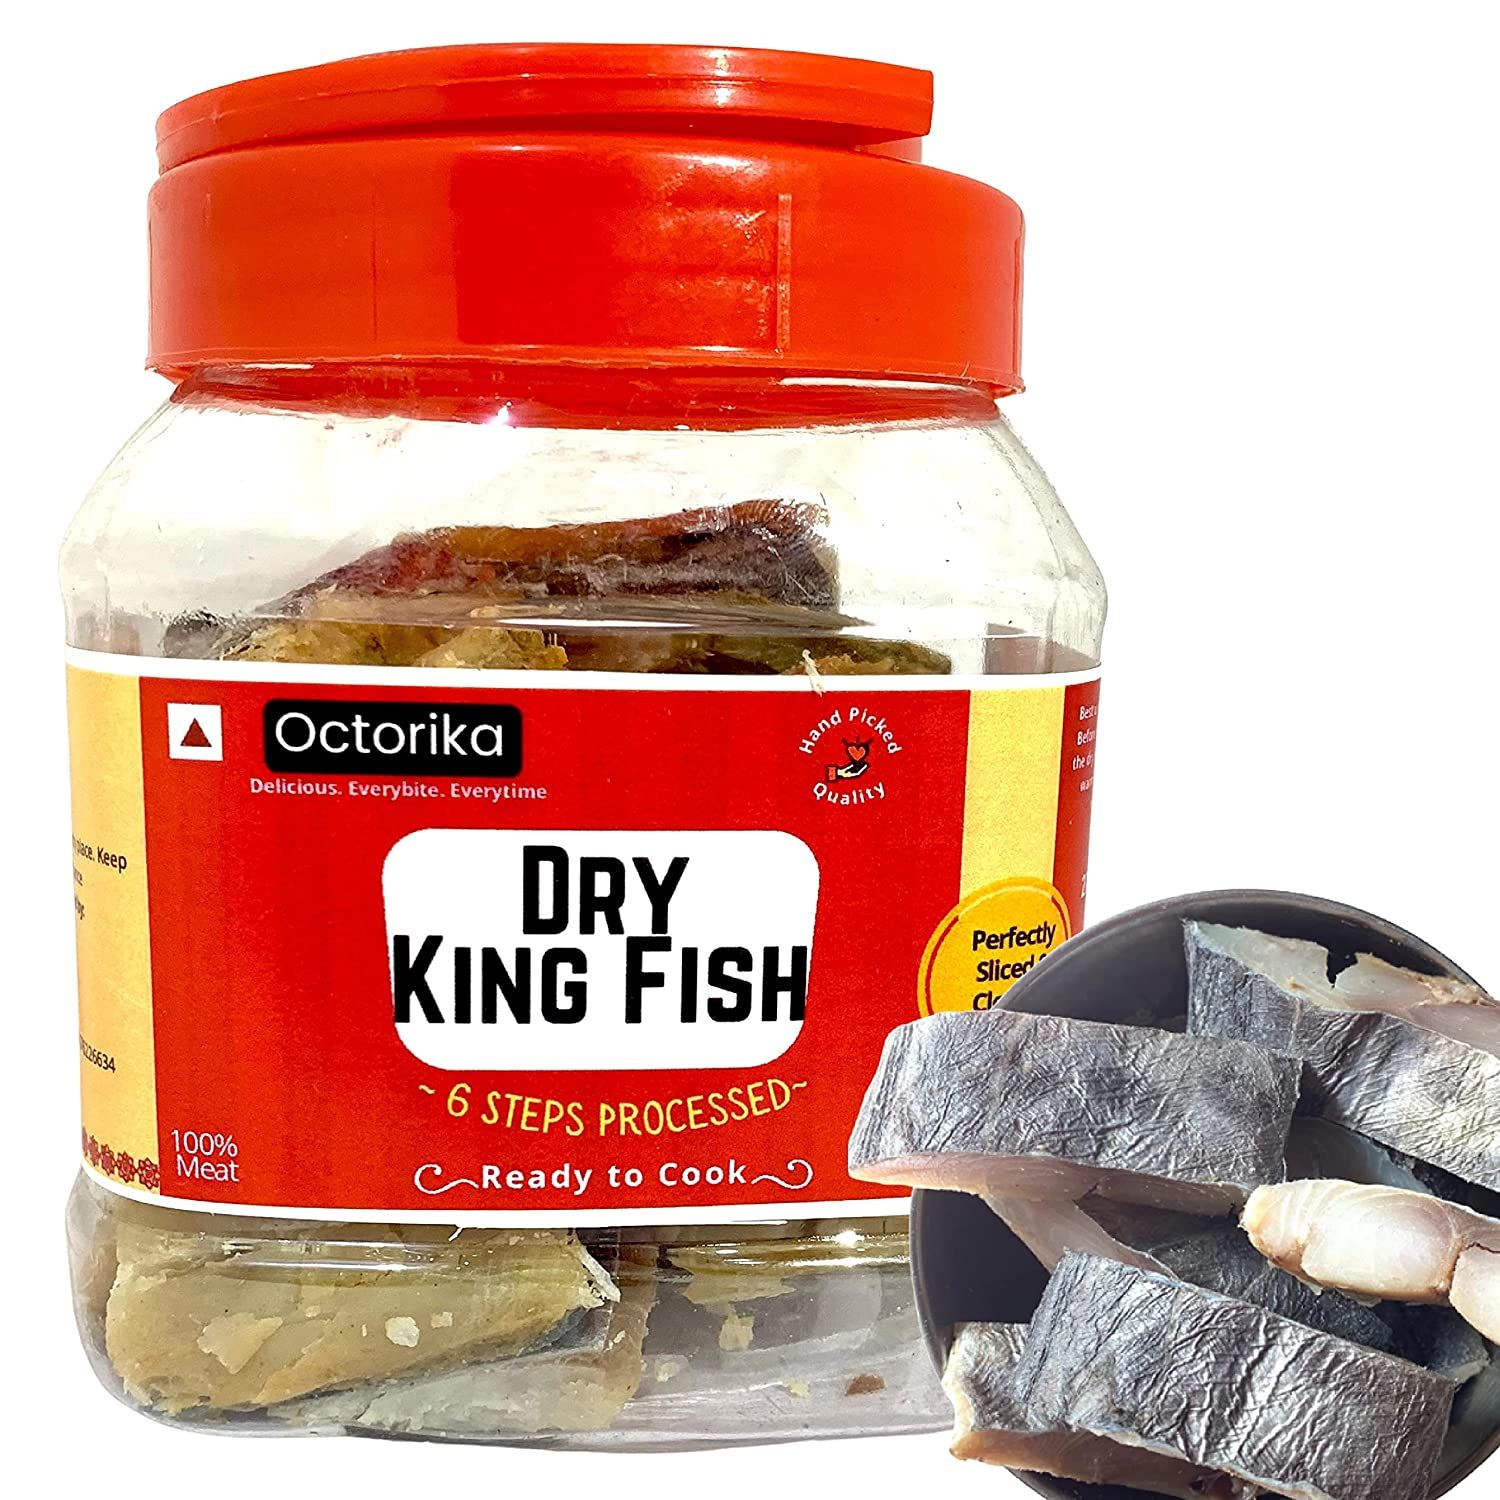 Octorika Dry Fish King Fish Image